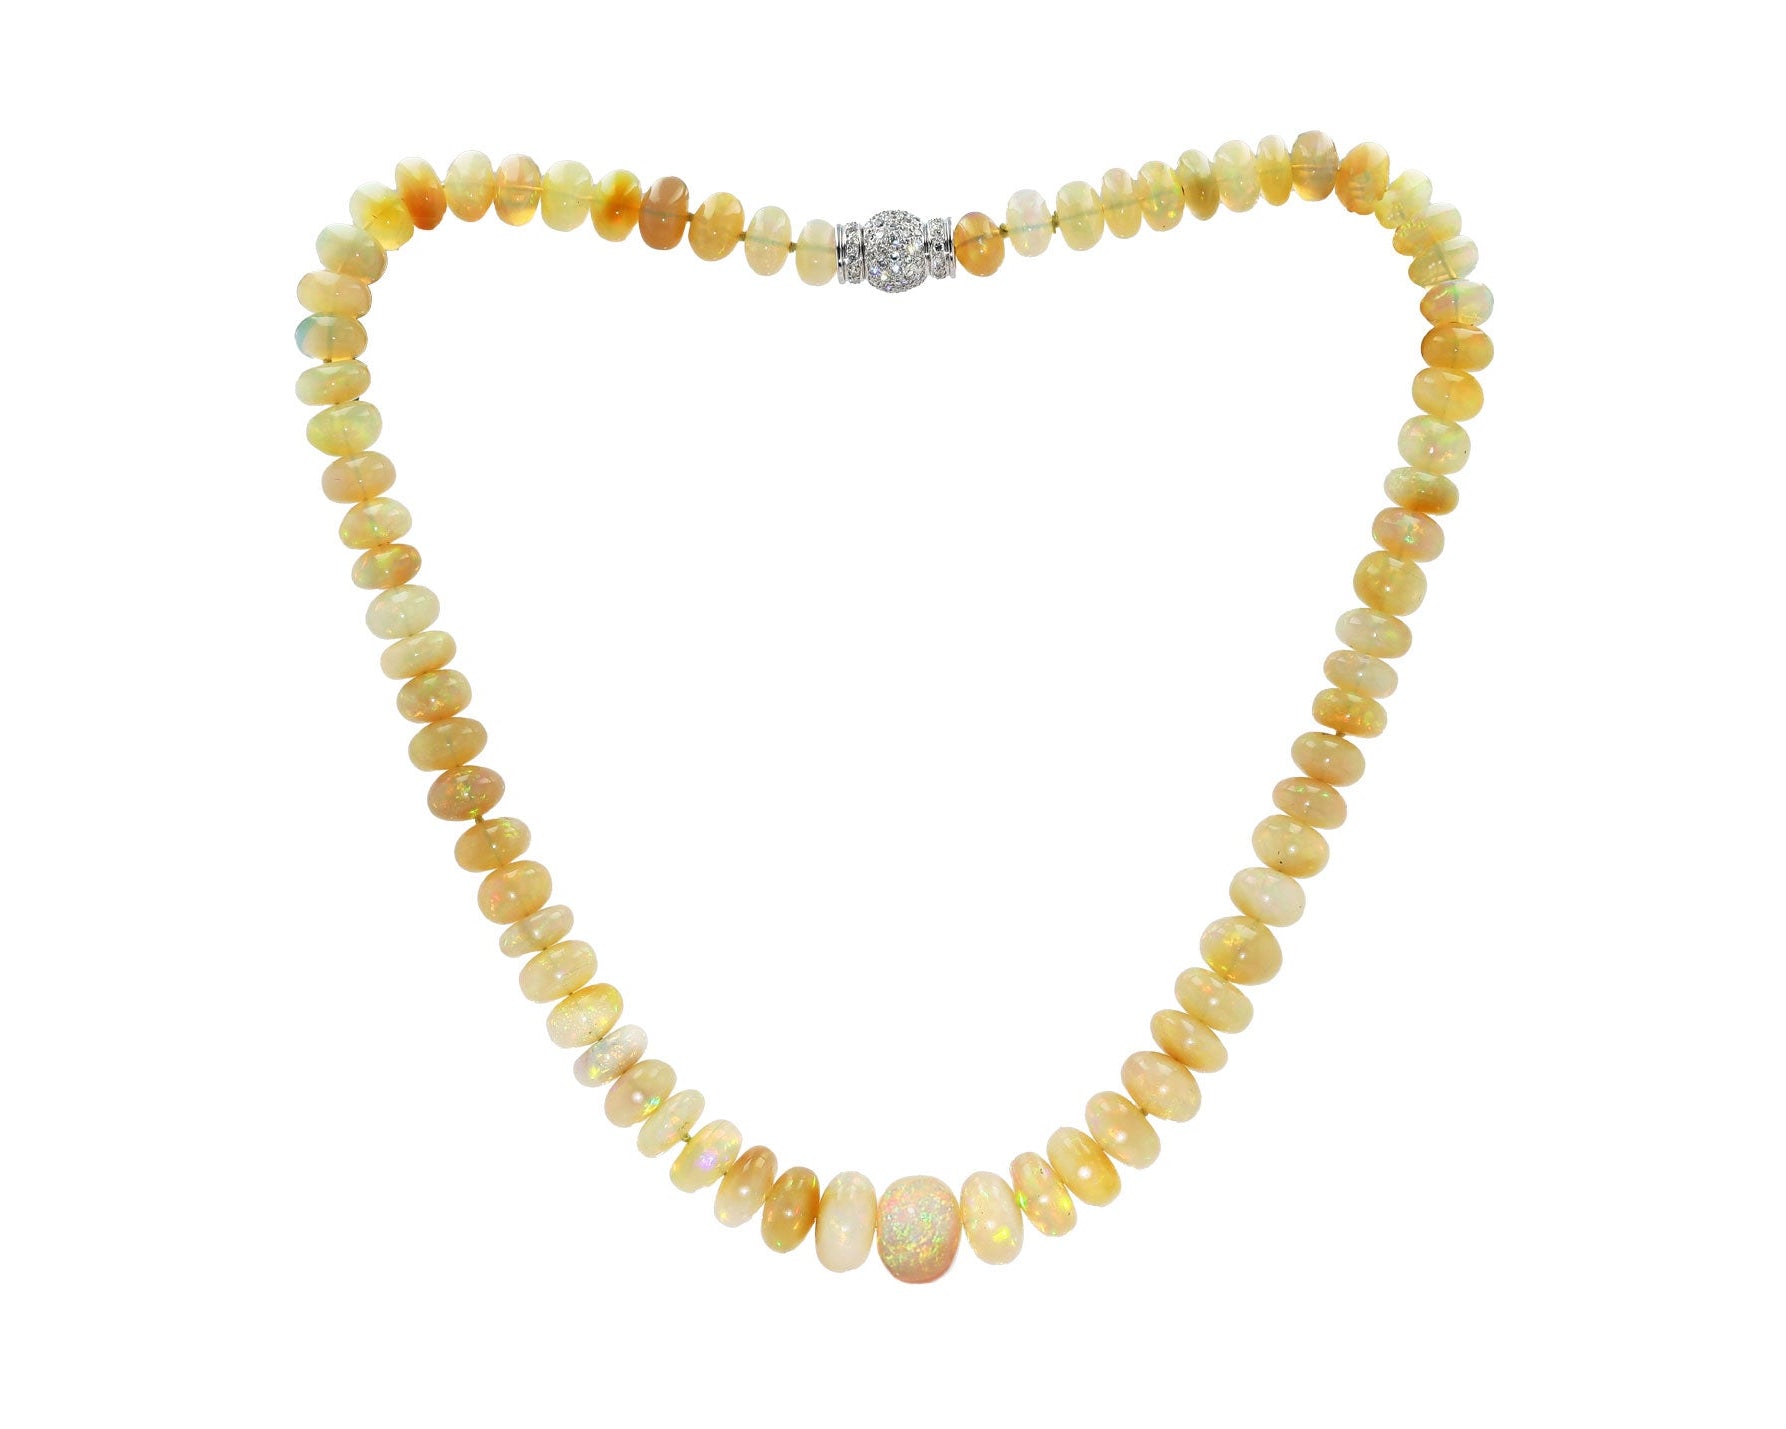 214 Carat Opal Beads & Pavé Diamond Clasp Necklace